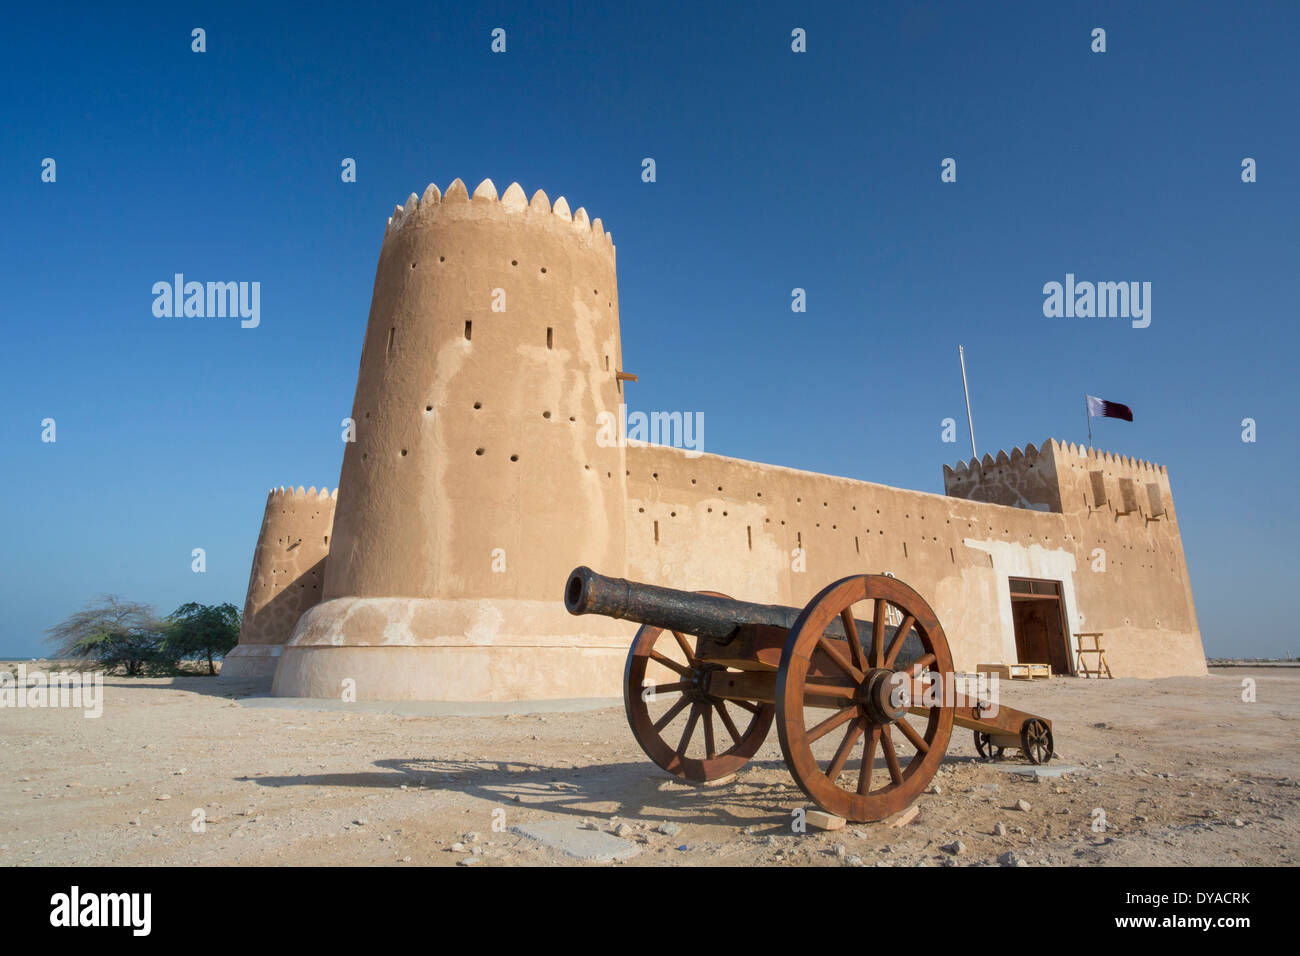 gun fortification World Heritage Al Zubarah Qatar Middle East architecture canon landmark fort history museum site travel un Stock Photo